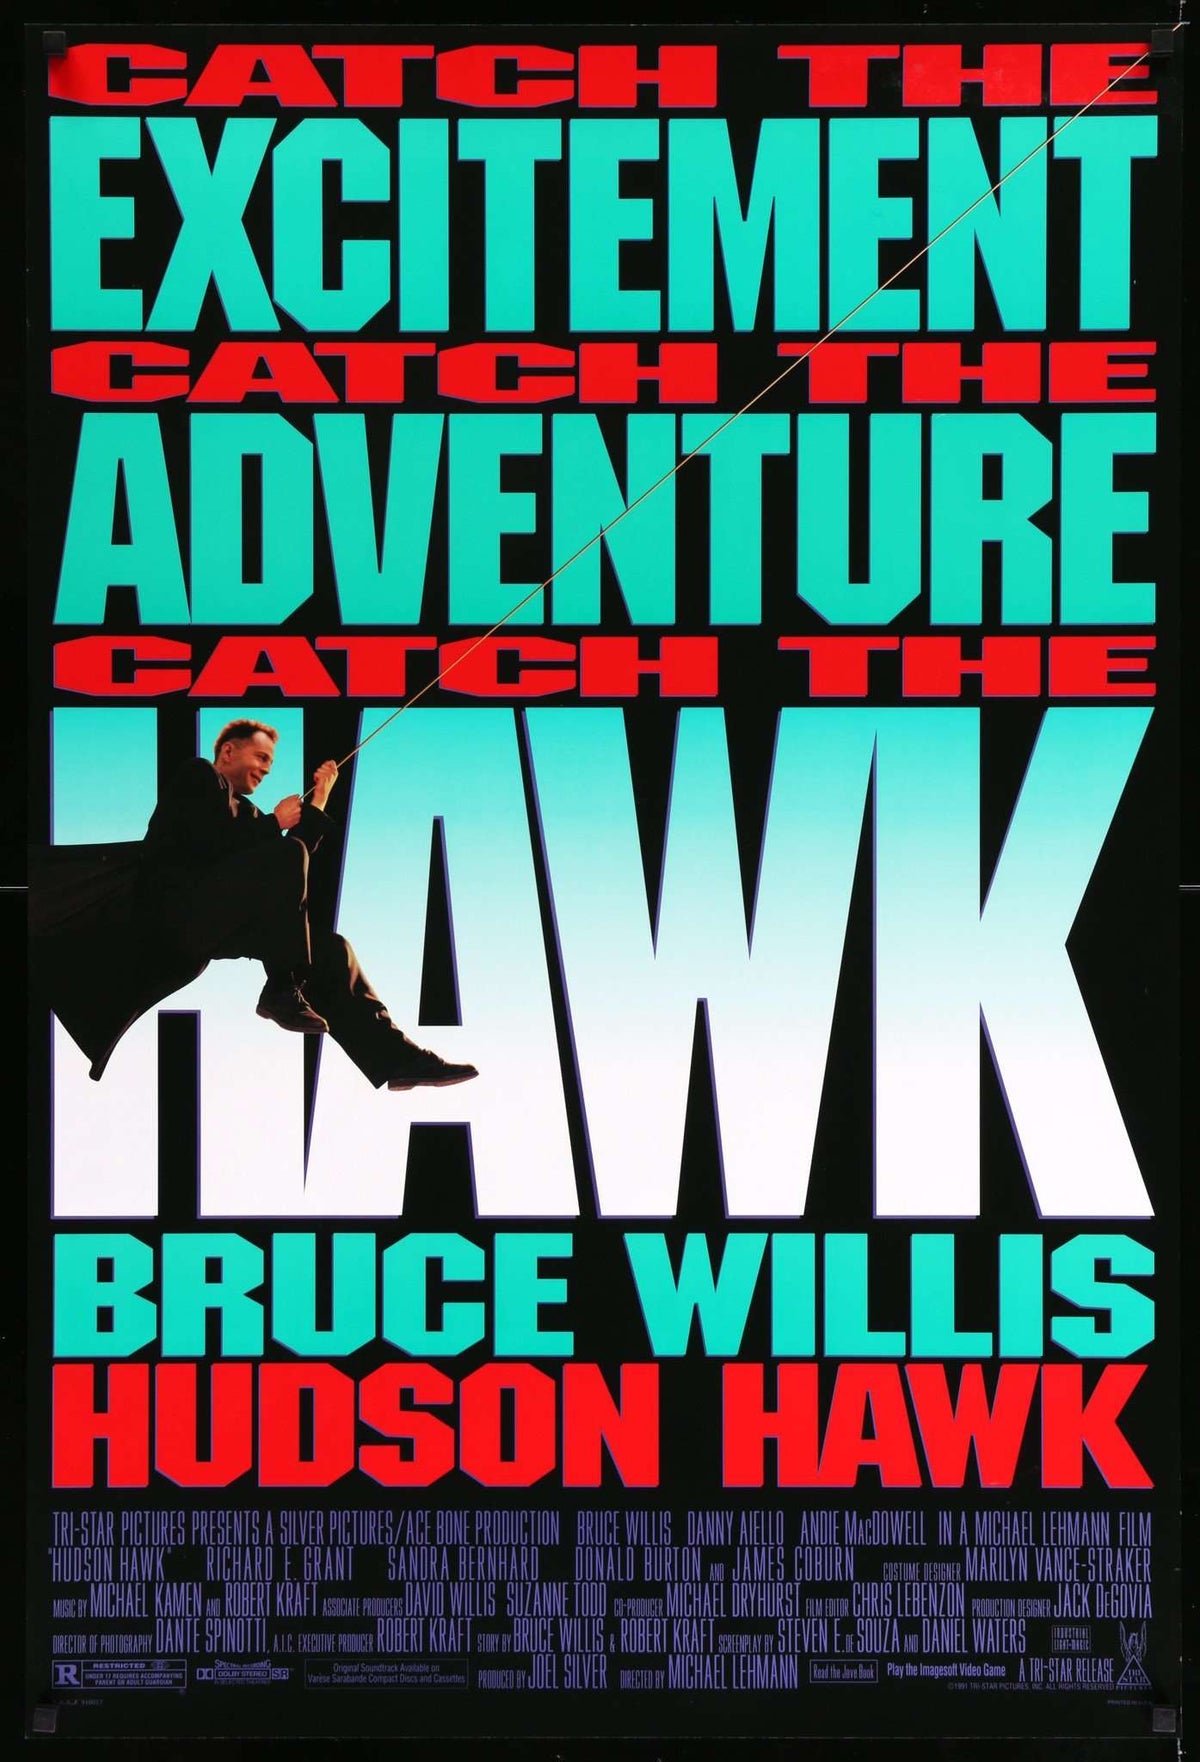 Hudson Hawk (1991) original movie poster for sale at Original Film Art